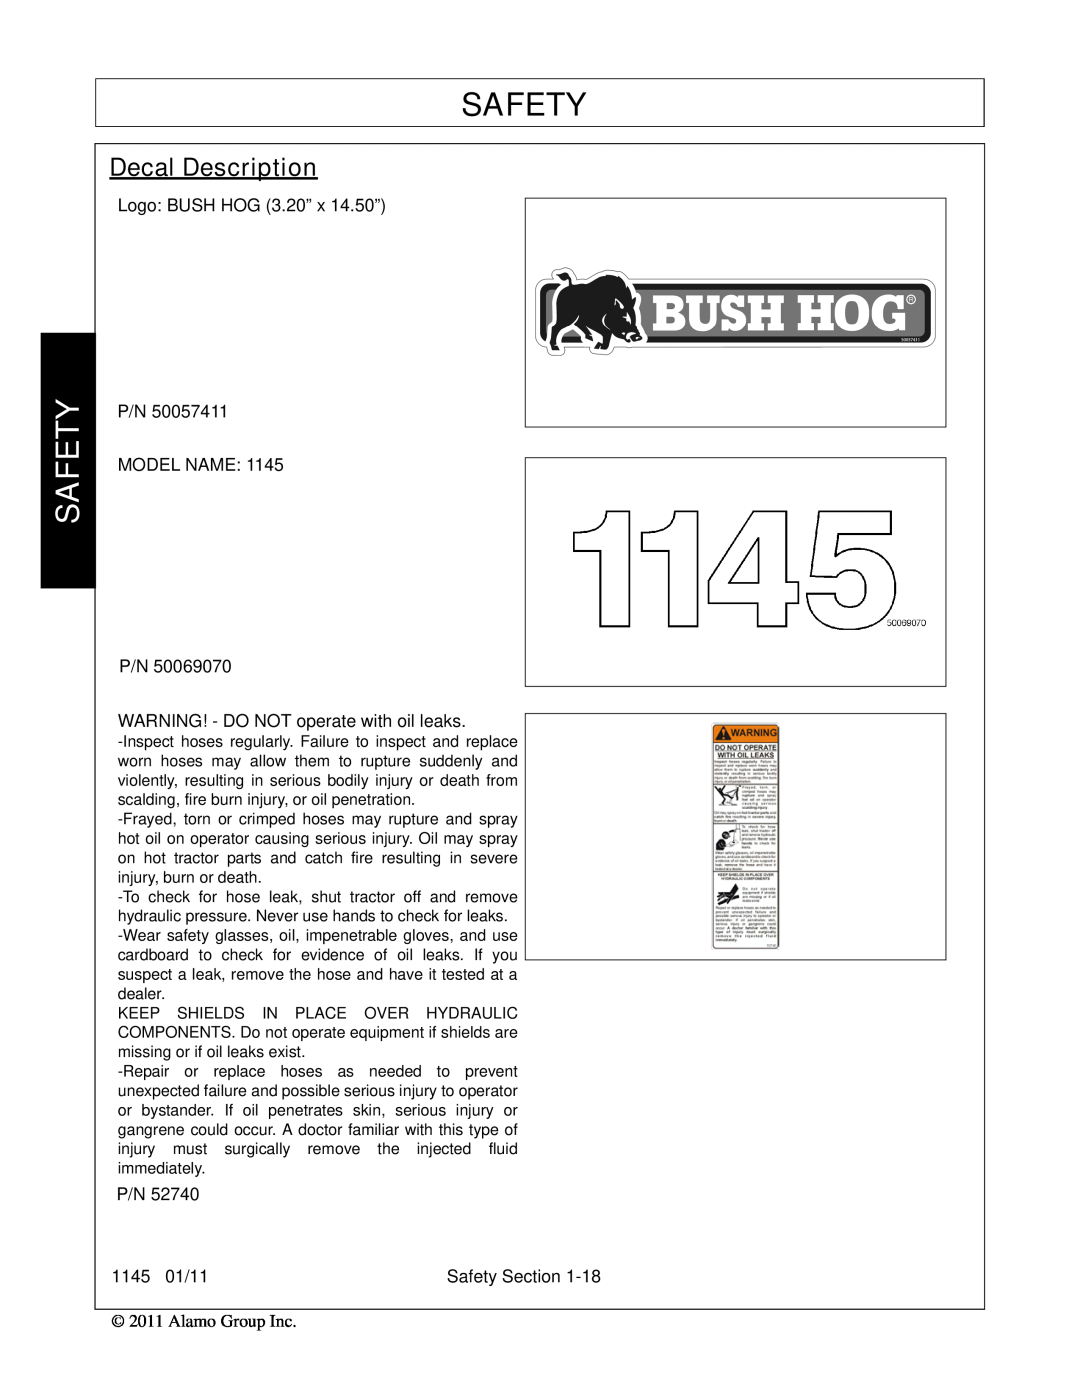 Bush Hog 1145 manual Safety, Decal Description 